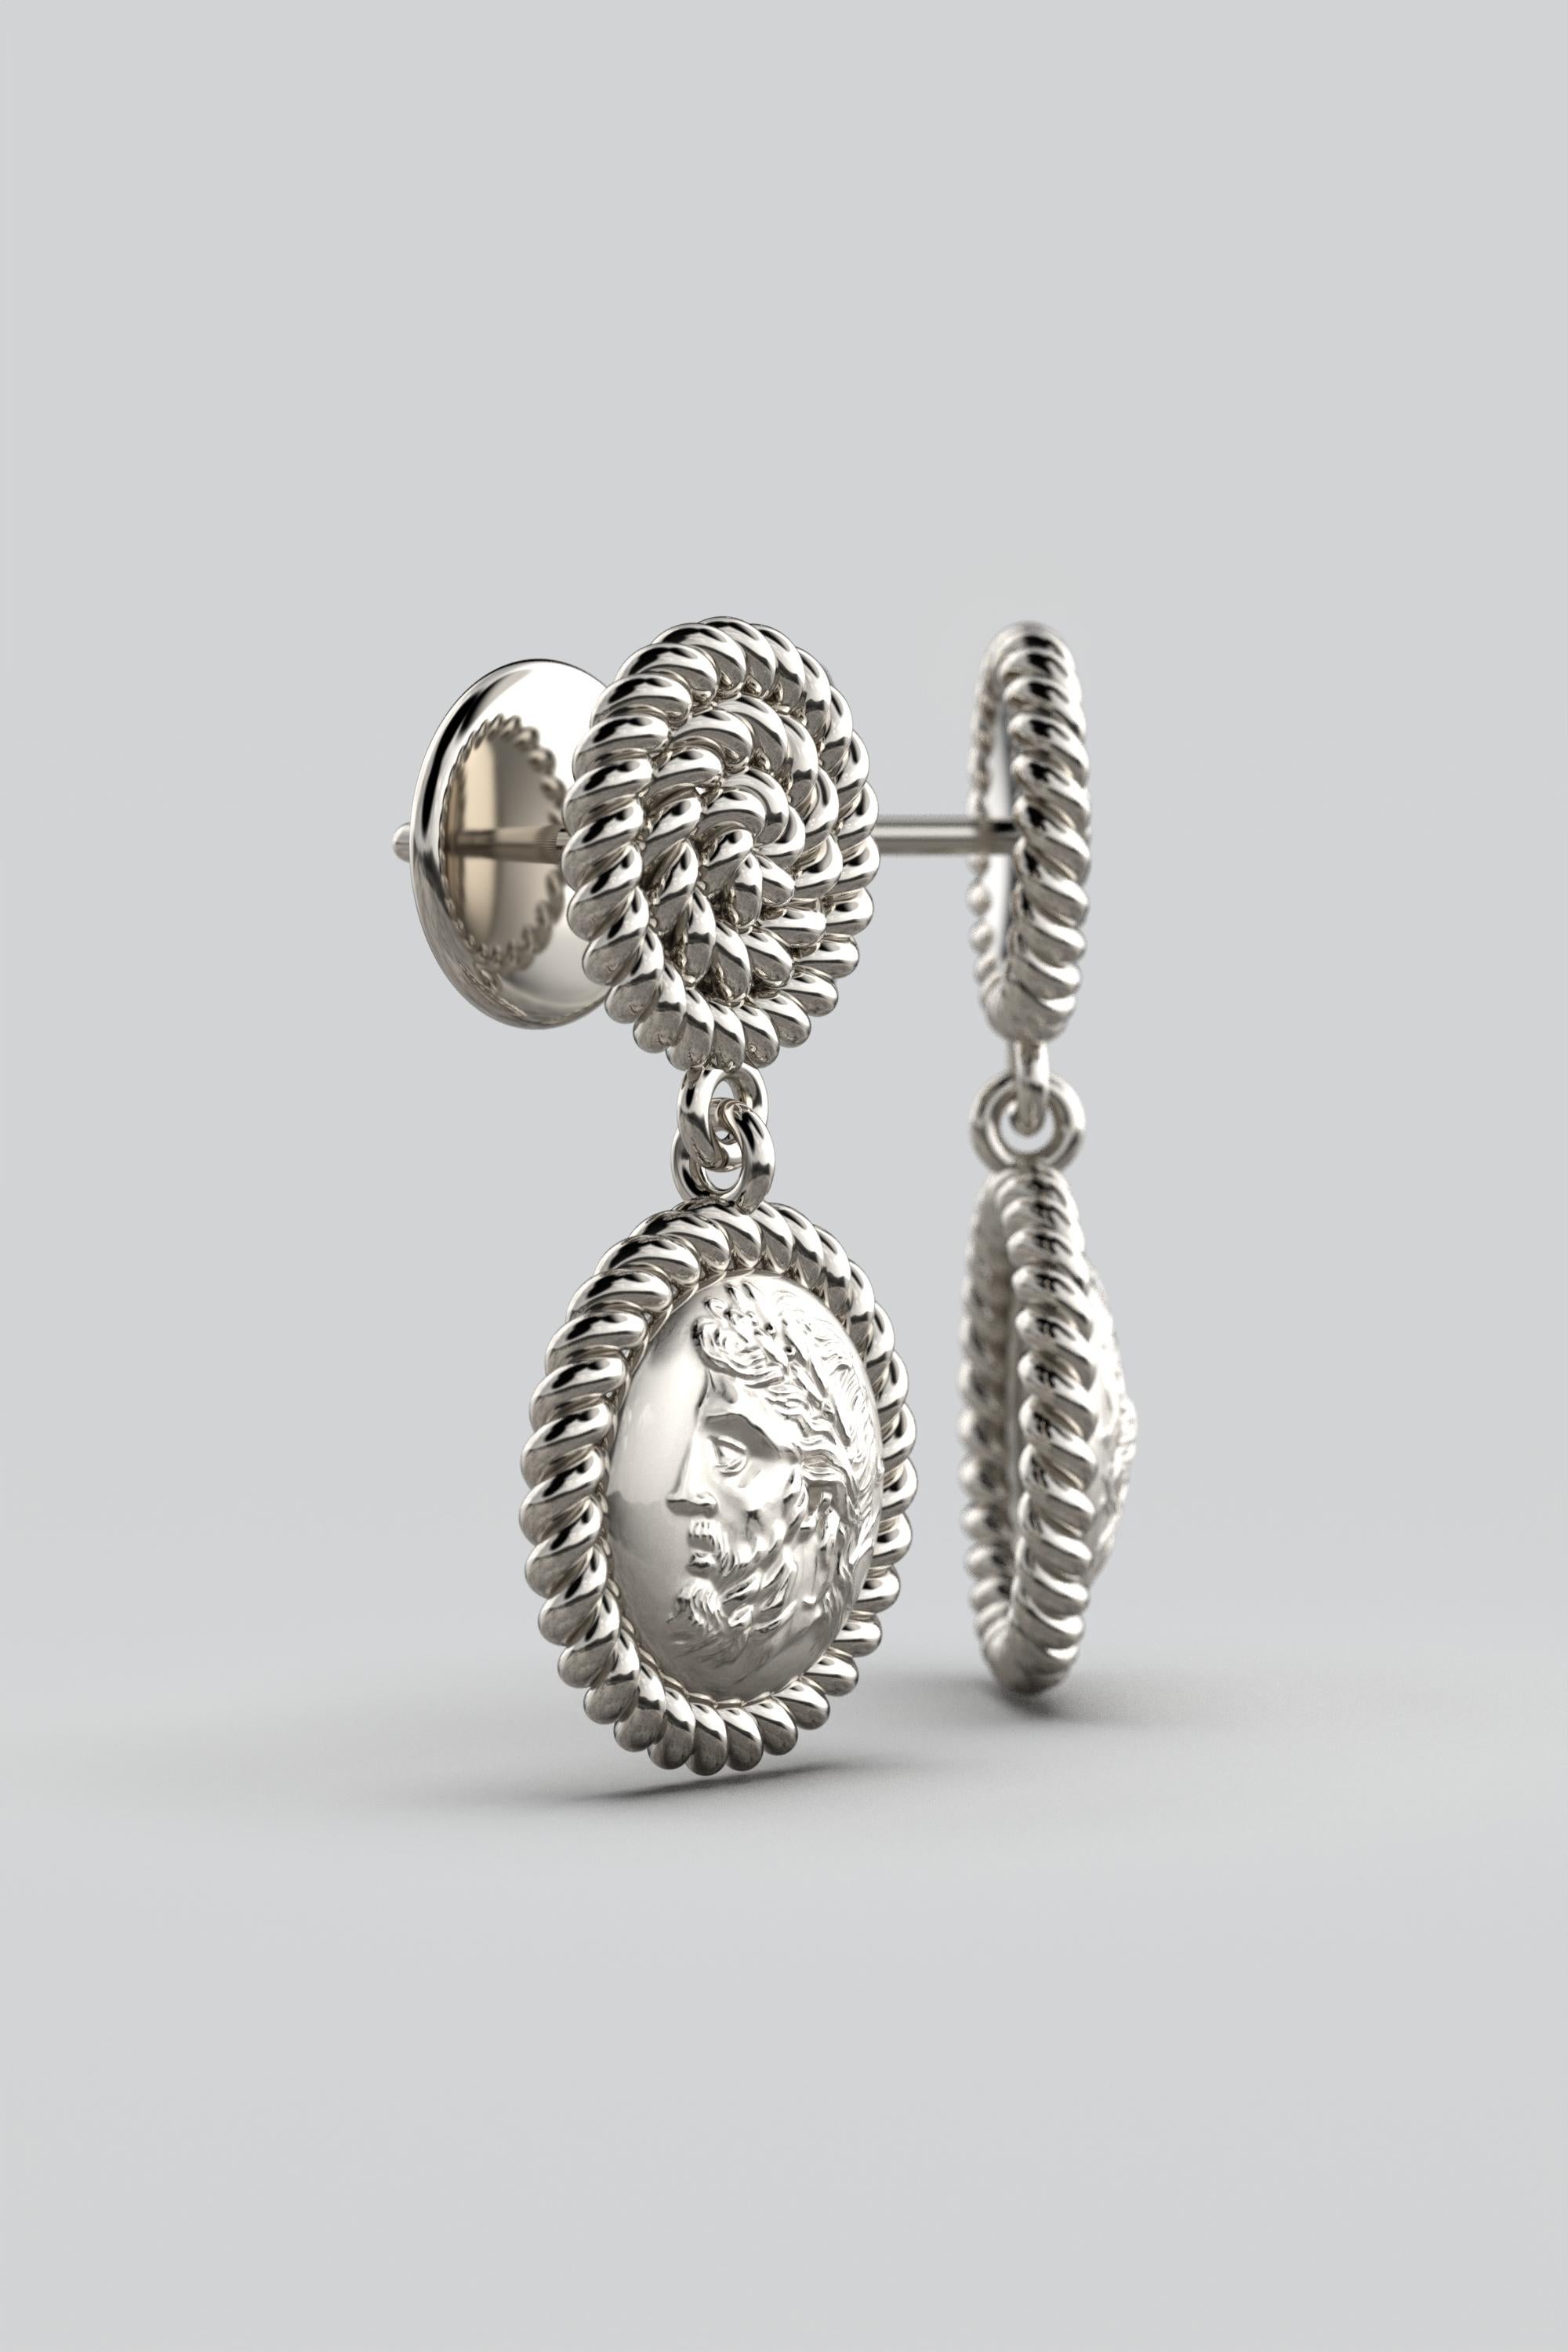 Dangle Earrings in 18k solid Gold, Ancient Greek Style, Zeus Coin Earrings For Sale 3